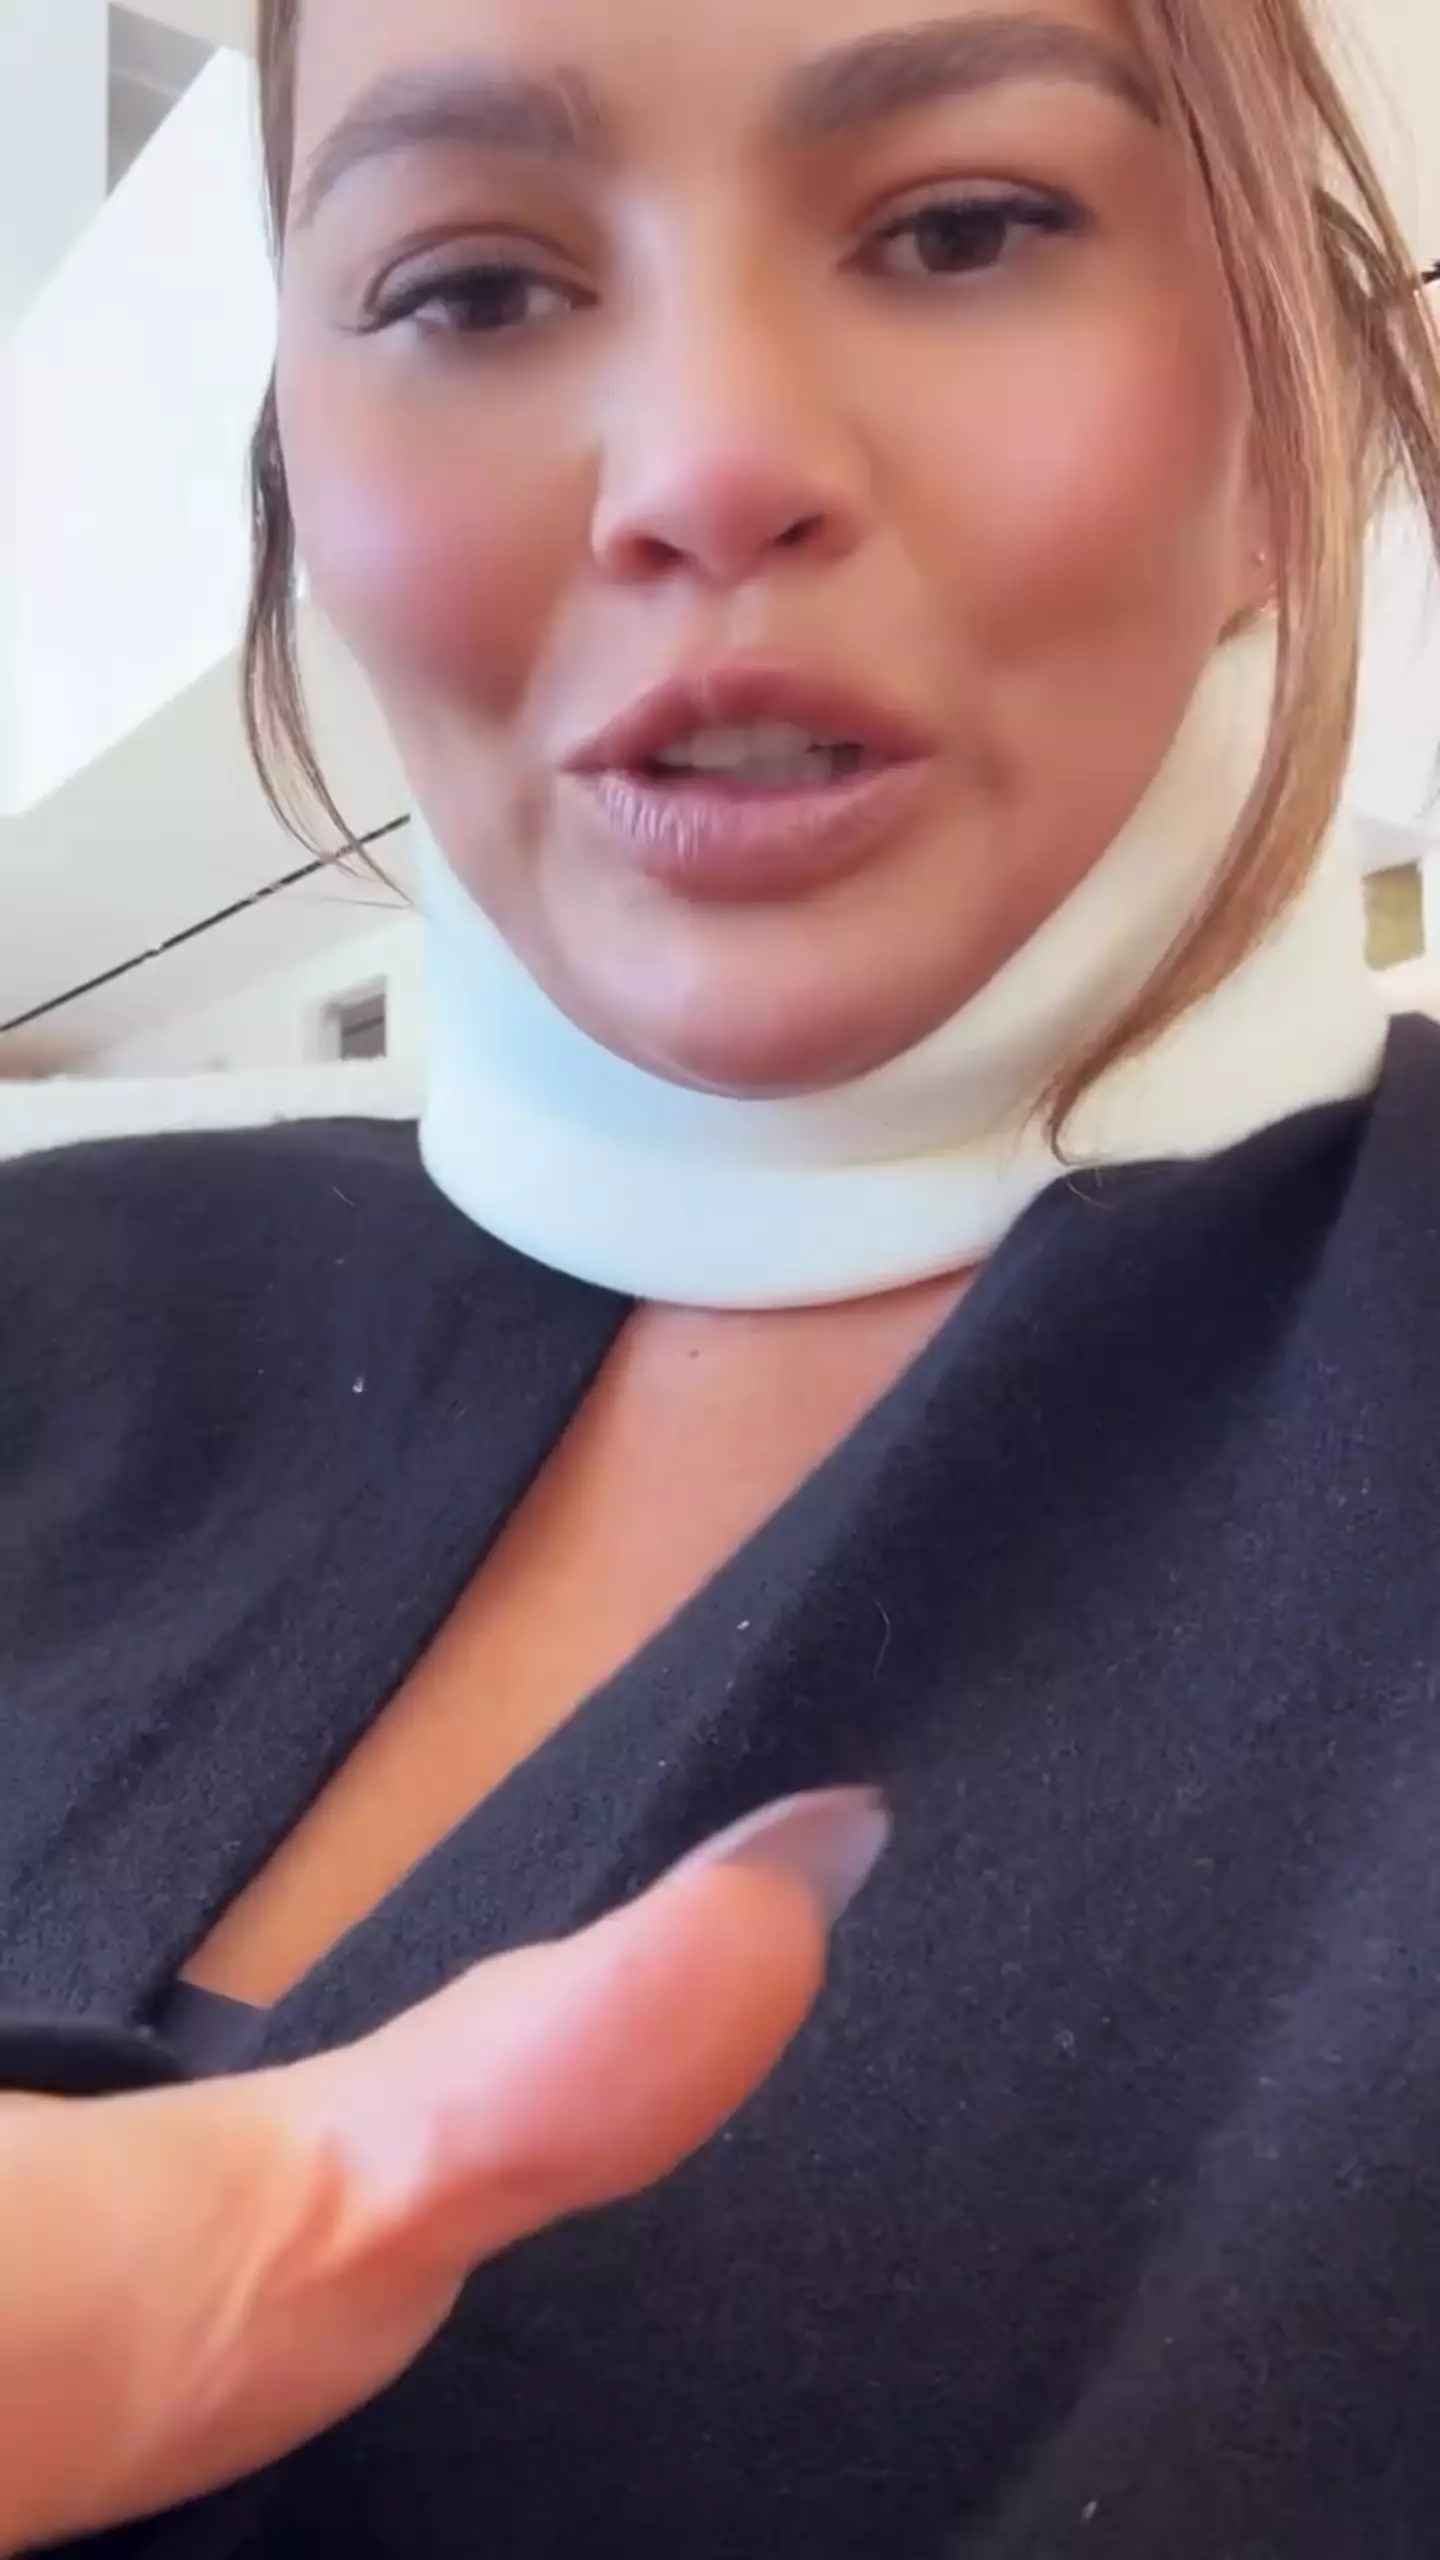 Chrissy posted pictures of herself wearing a neck brace. Instagram/chrissyteigen